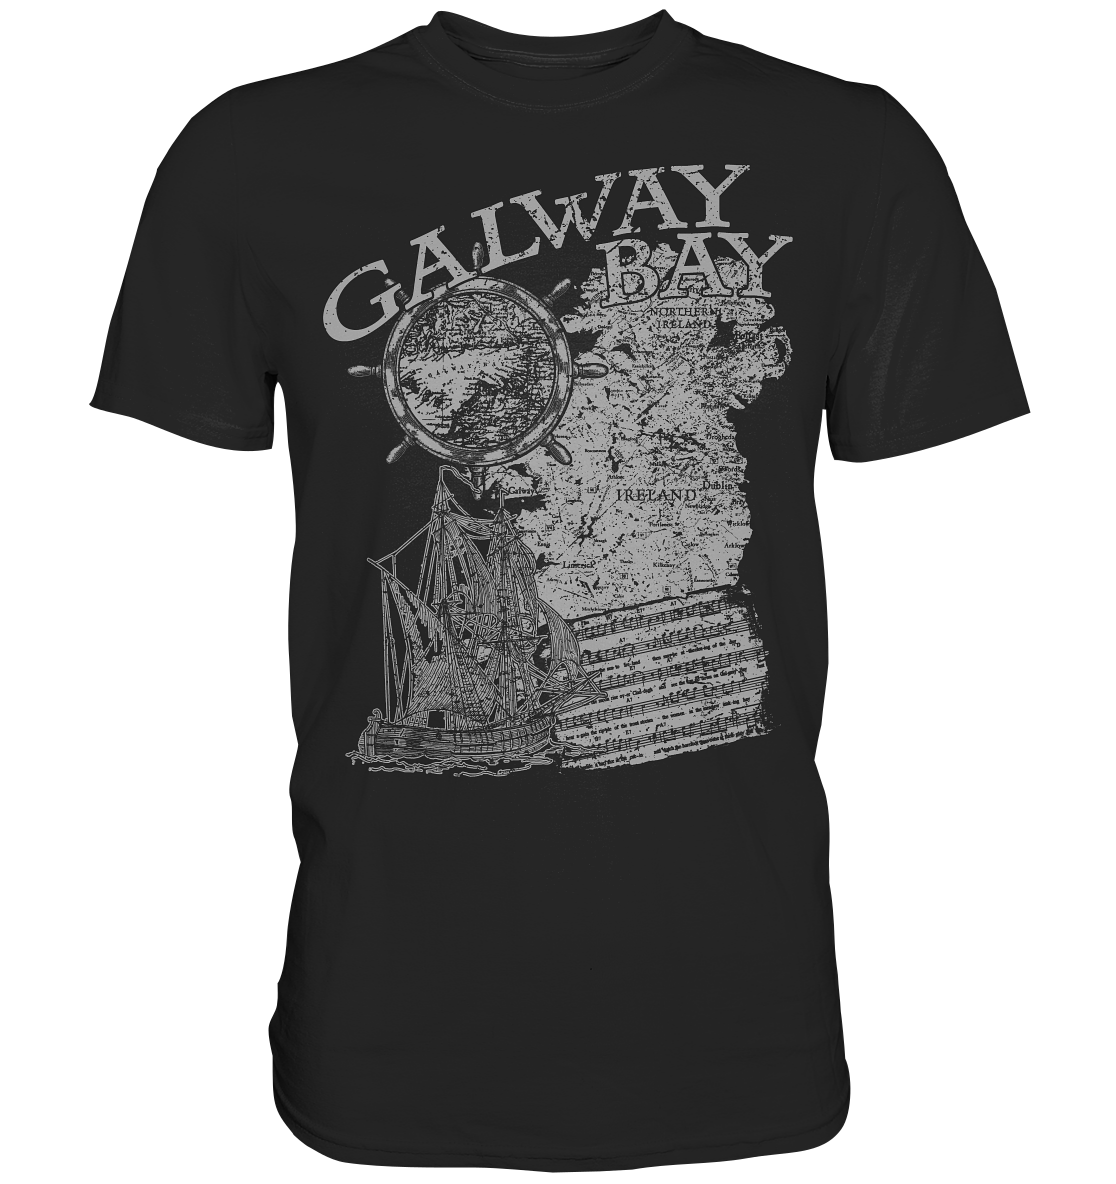 "Galway Bay" - Premium Shirt